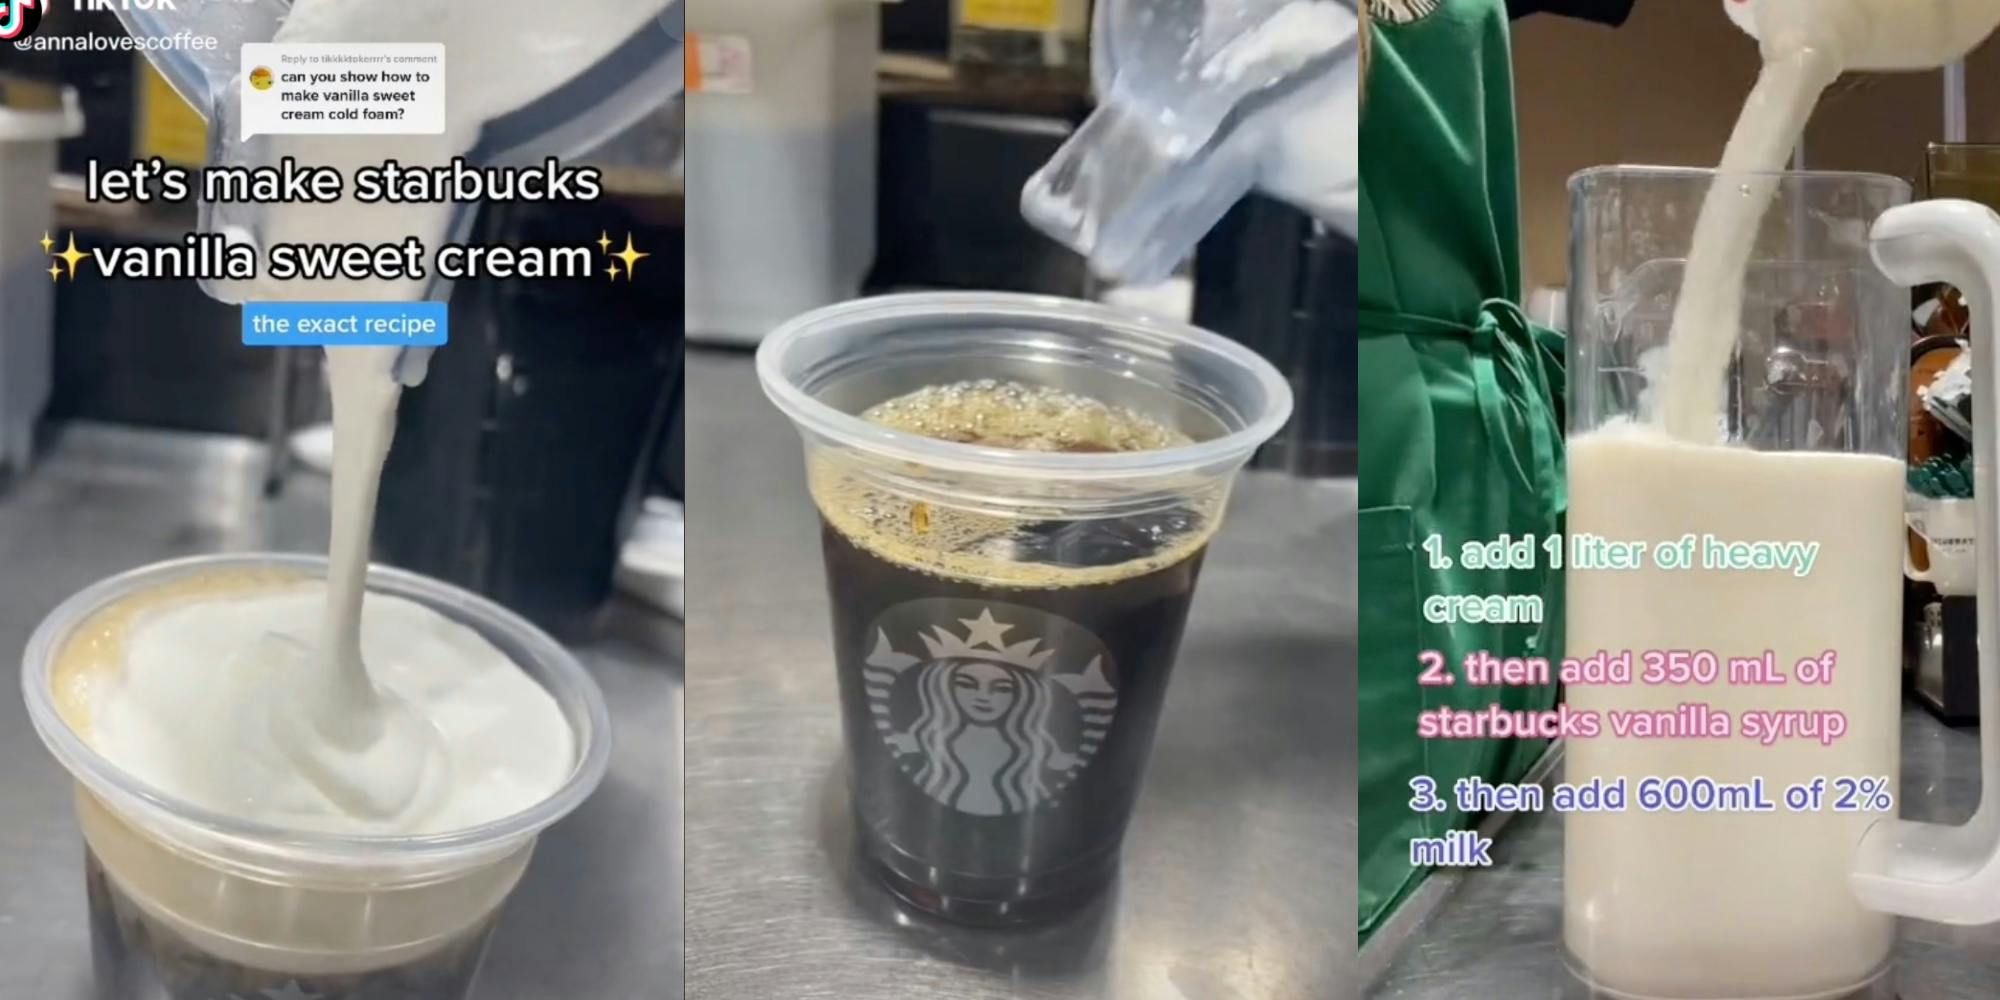 Starbucks Worker Shows How Vanilla Sweet Cream Is Made in Viral TikTok